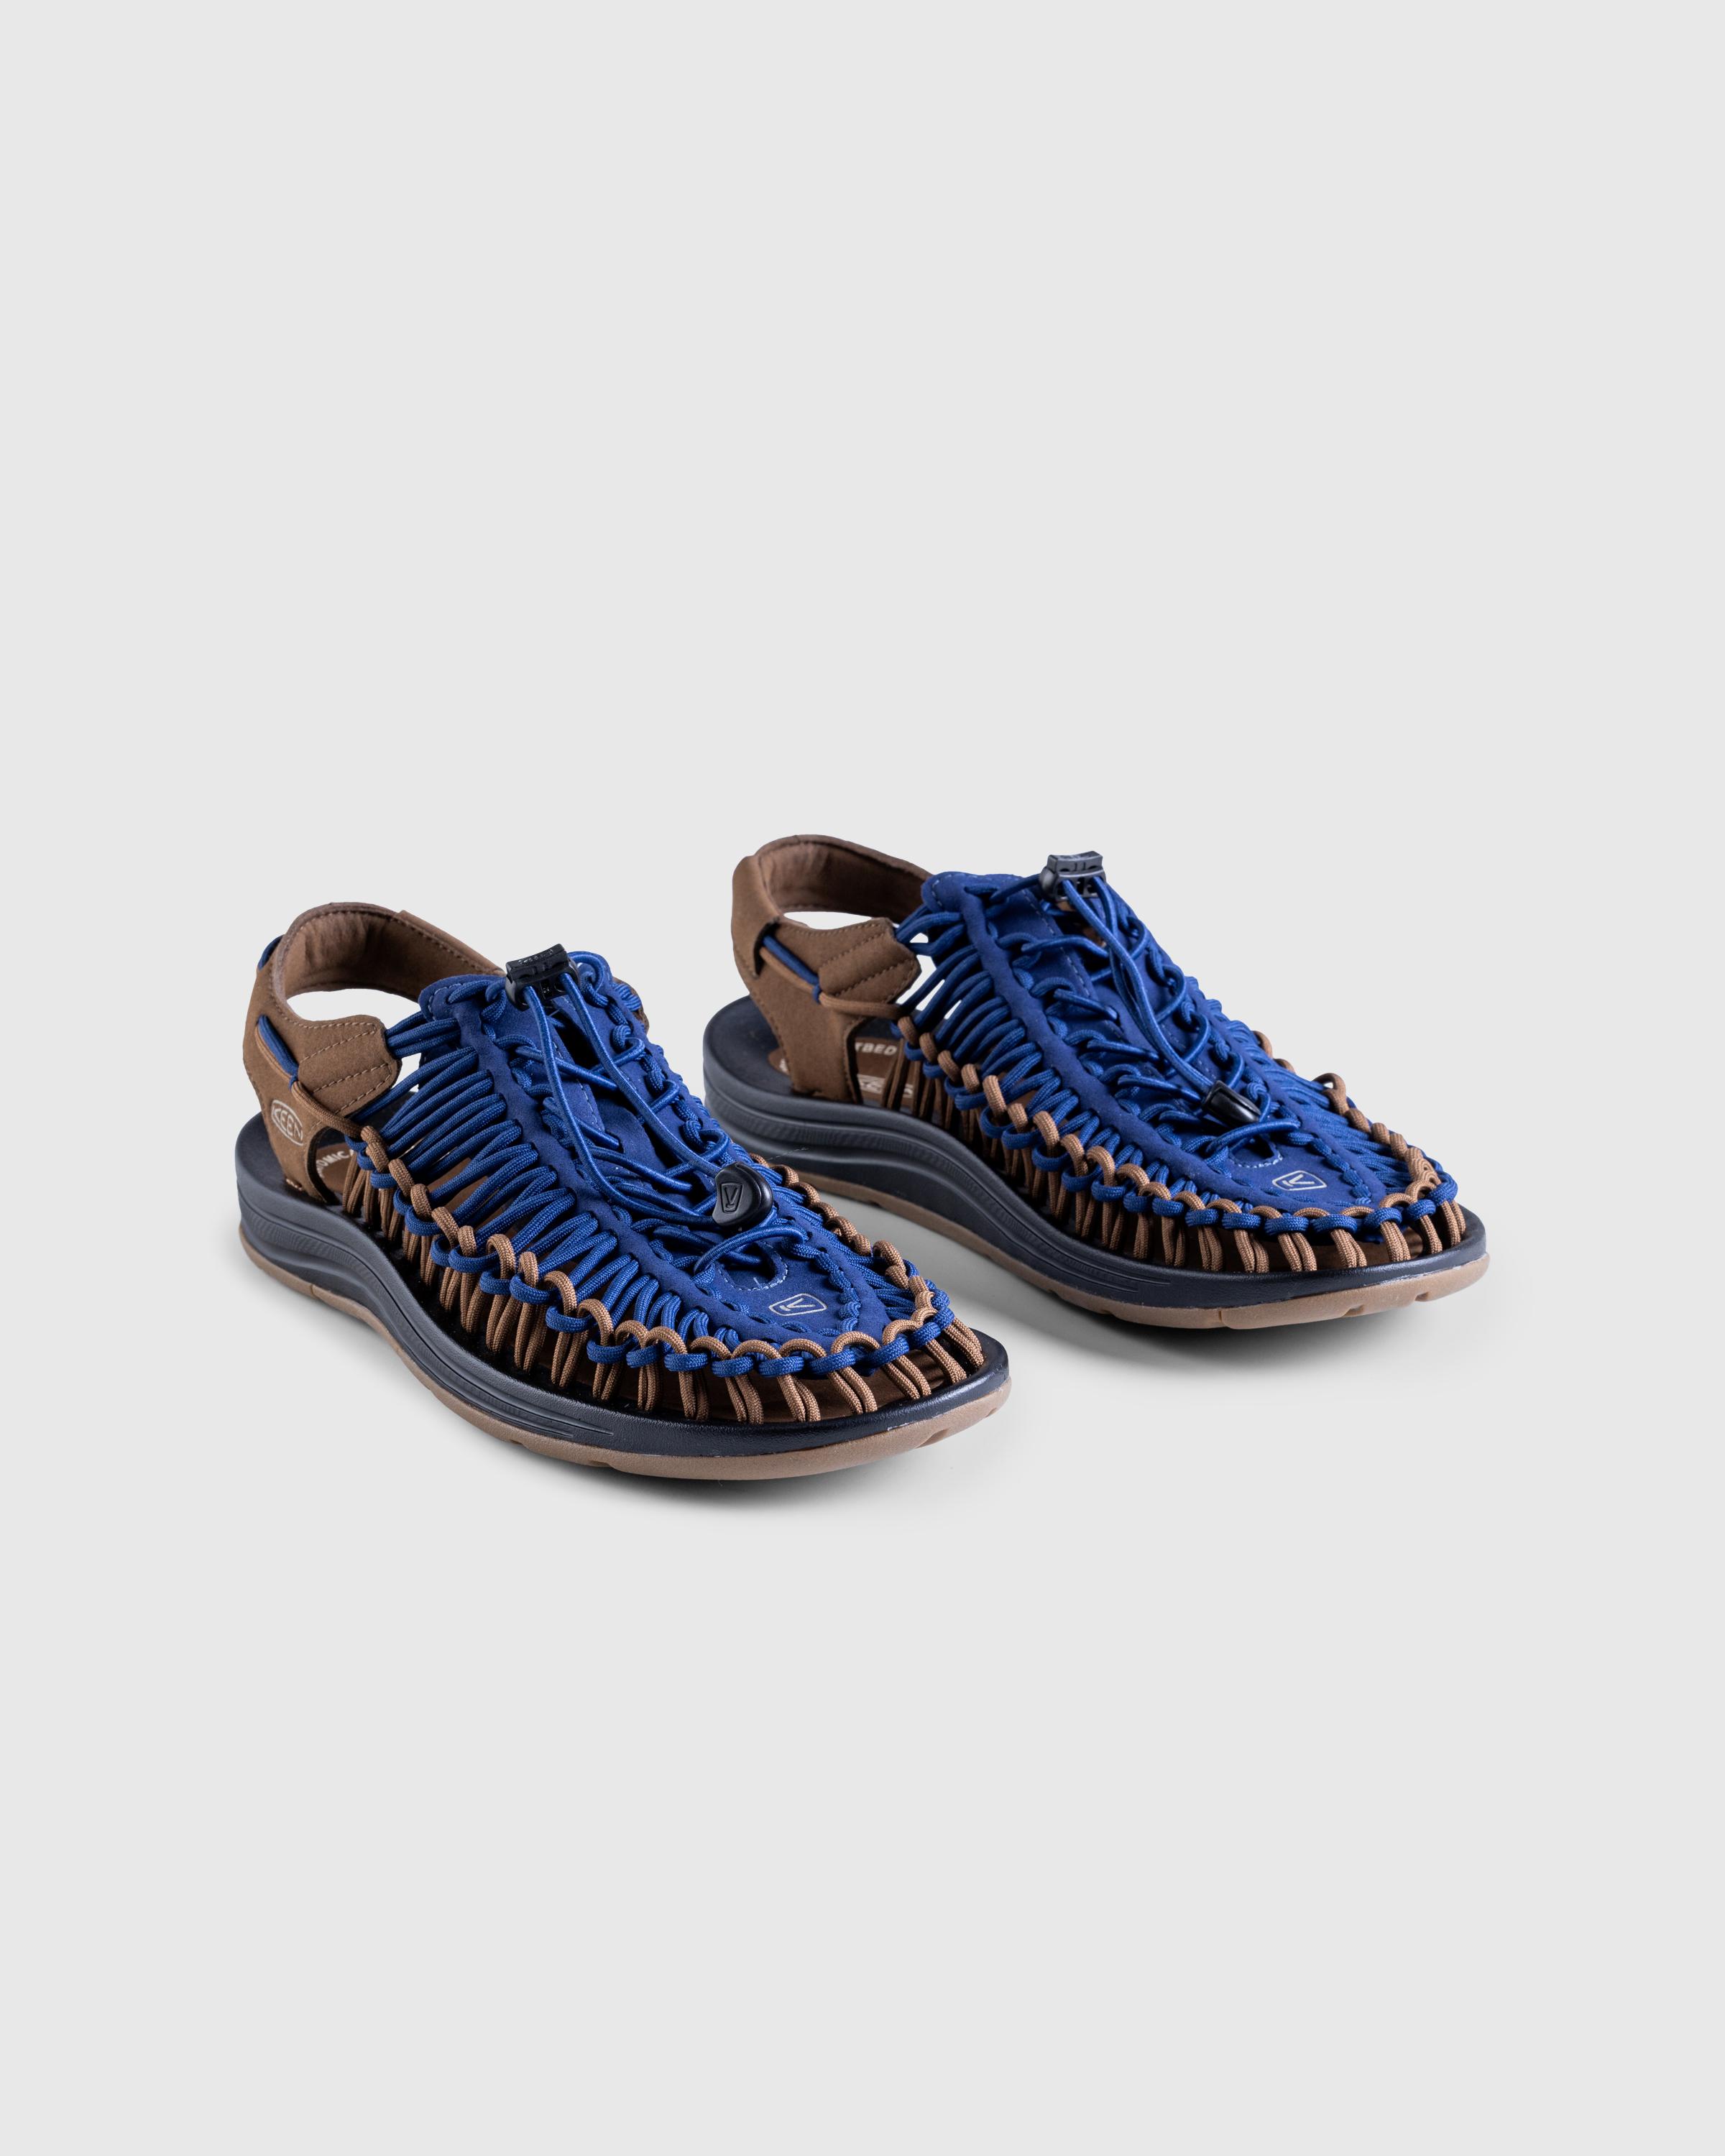 Keen – Uneek M Naval Academy/Bison - Sandals - Blue - Image 3